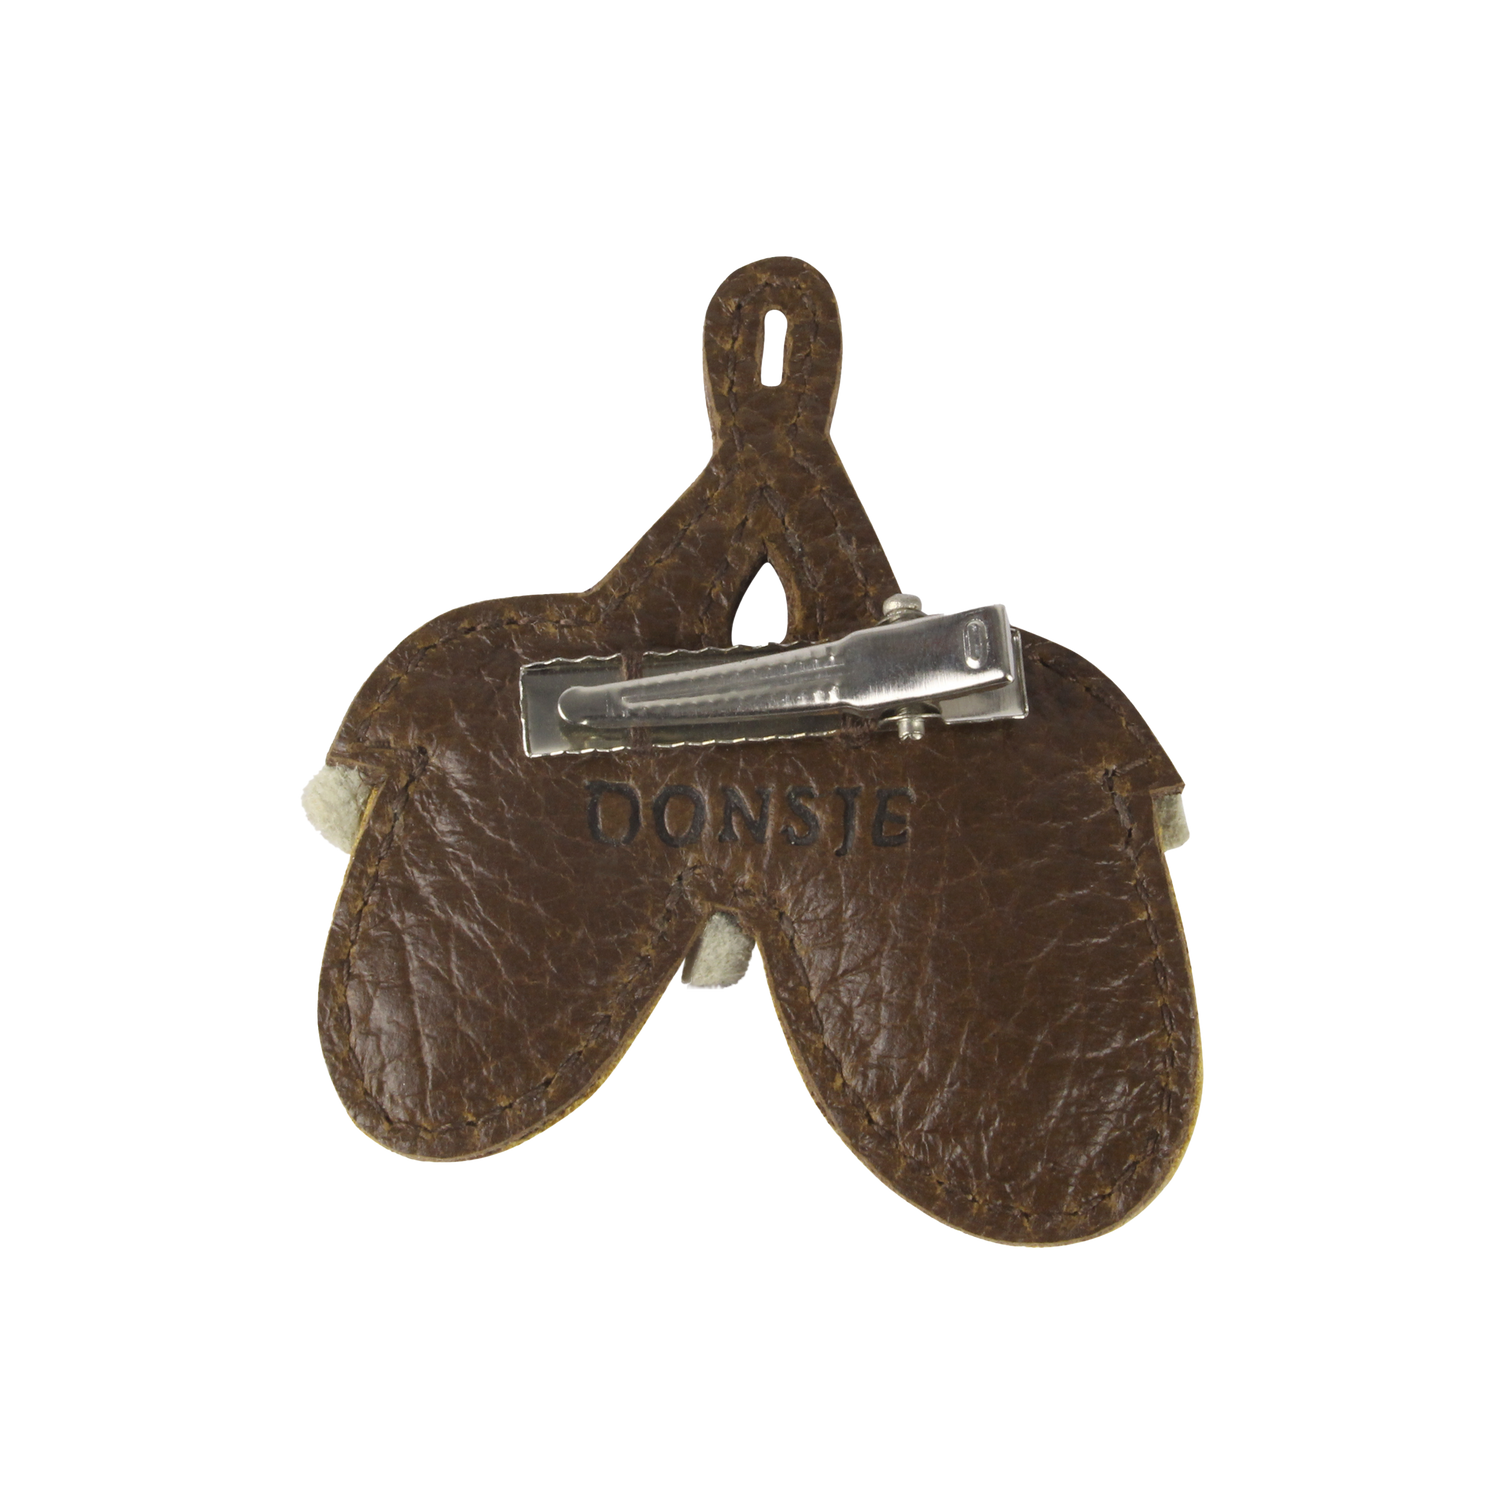 Wonda Hairclip | Acorn | Brown Grain Leather